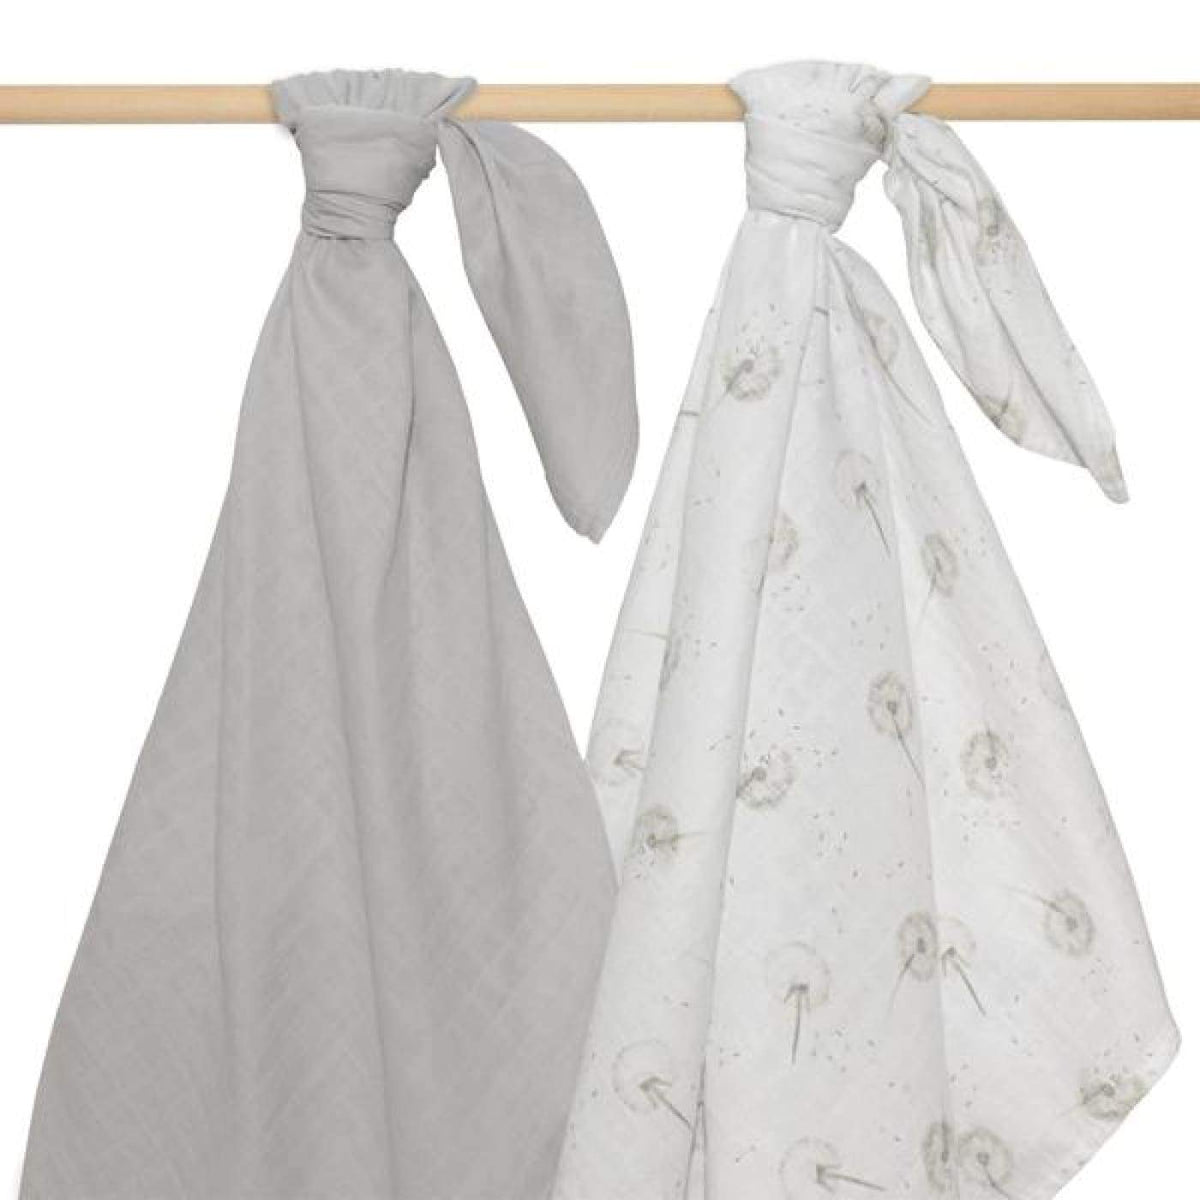 Living Textiles Muslin Wraps 2 pack - Dandelion/Grey - 100X100cm / Dandelion/Grey - NURSERY &amp; BEDTIME - SWADDLES/WRAPS